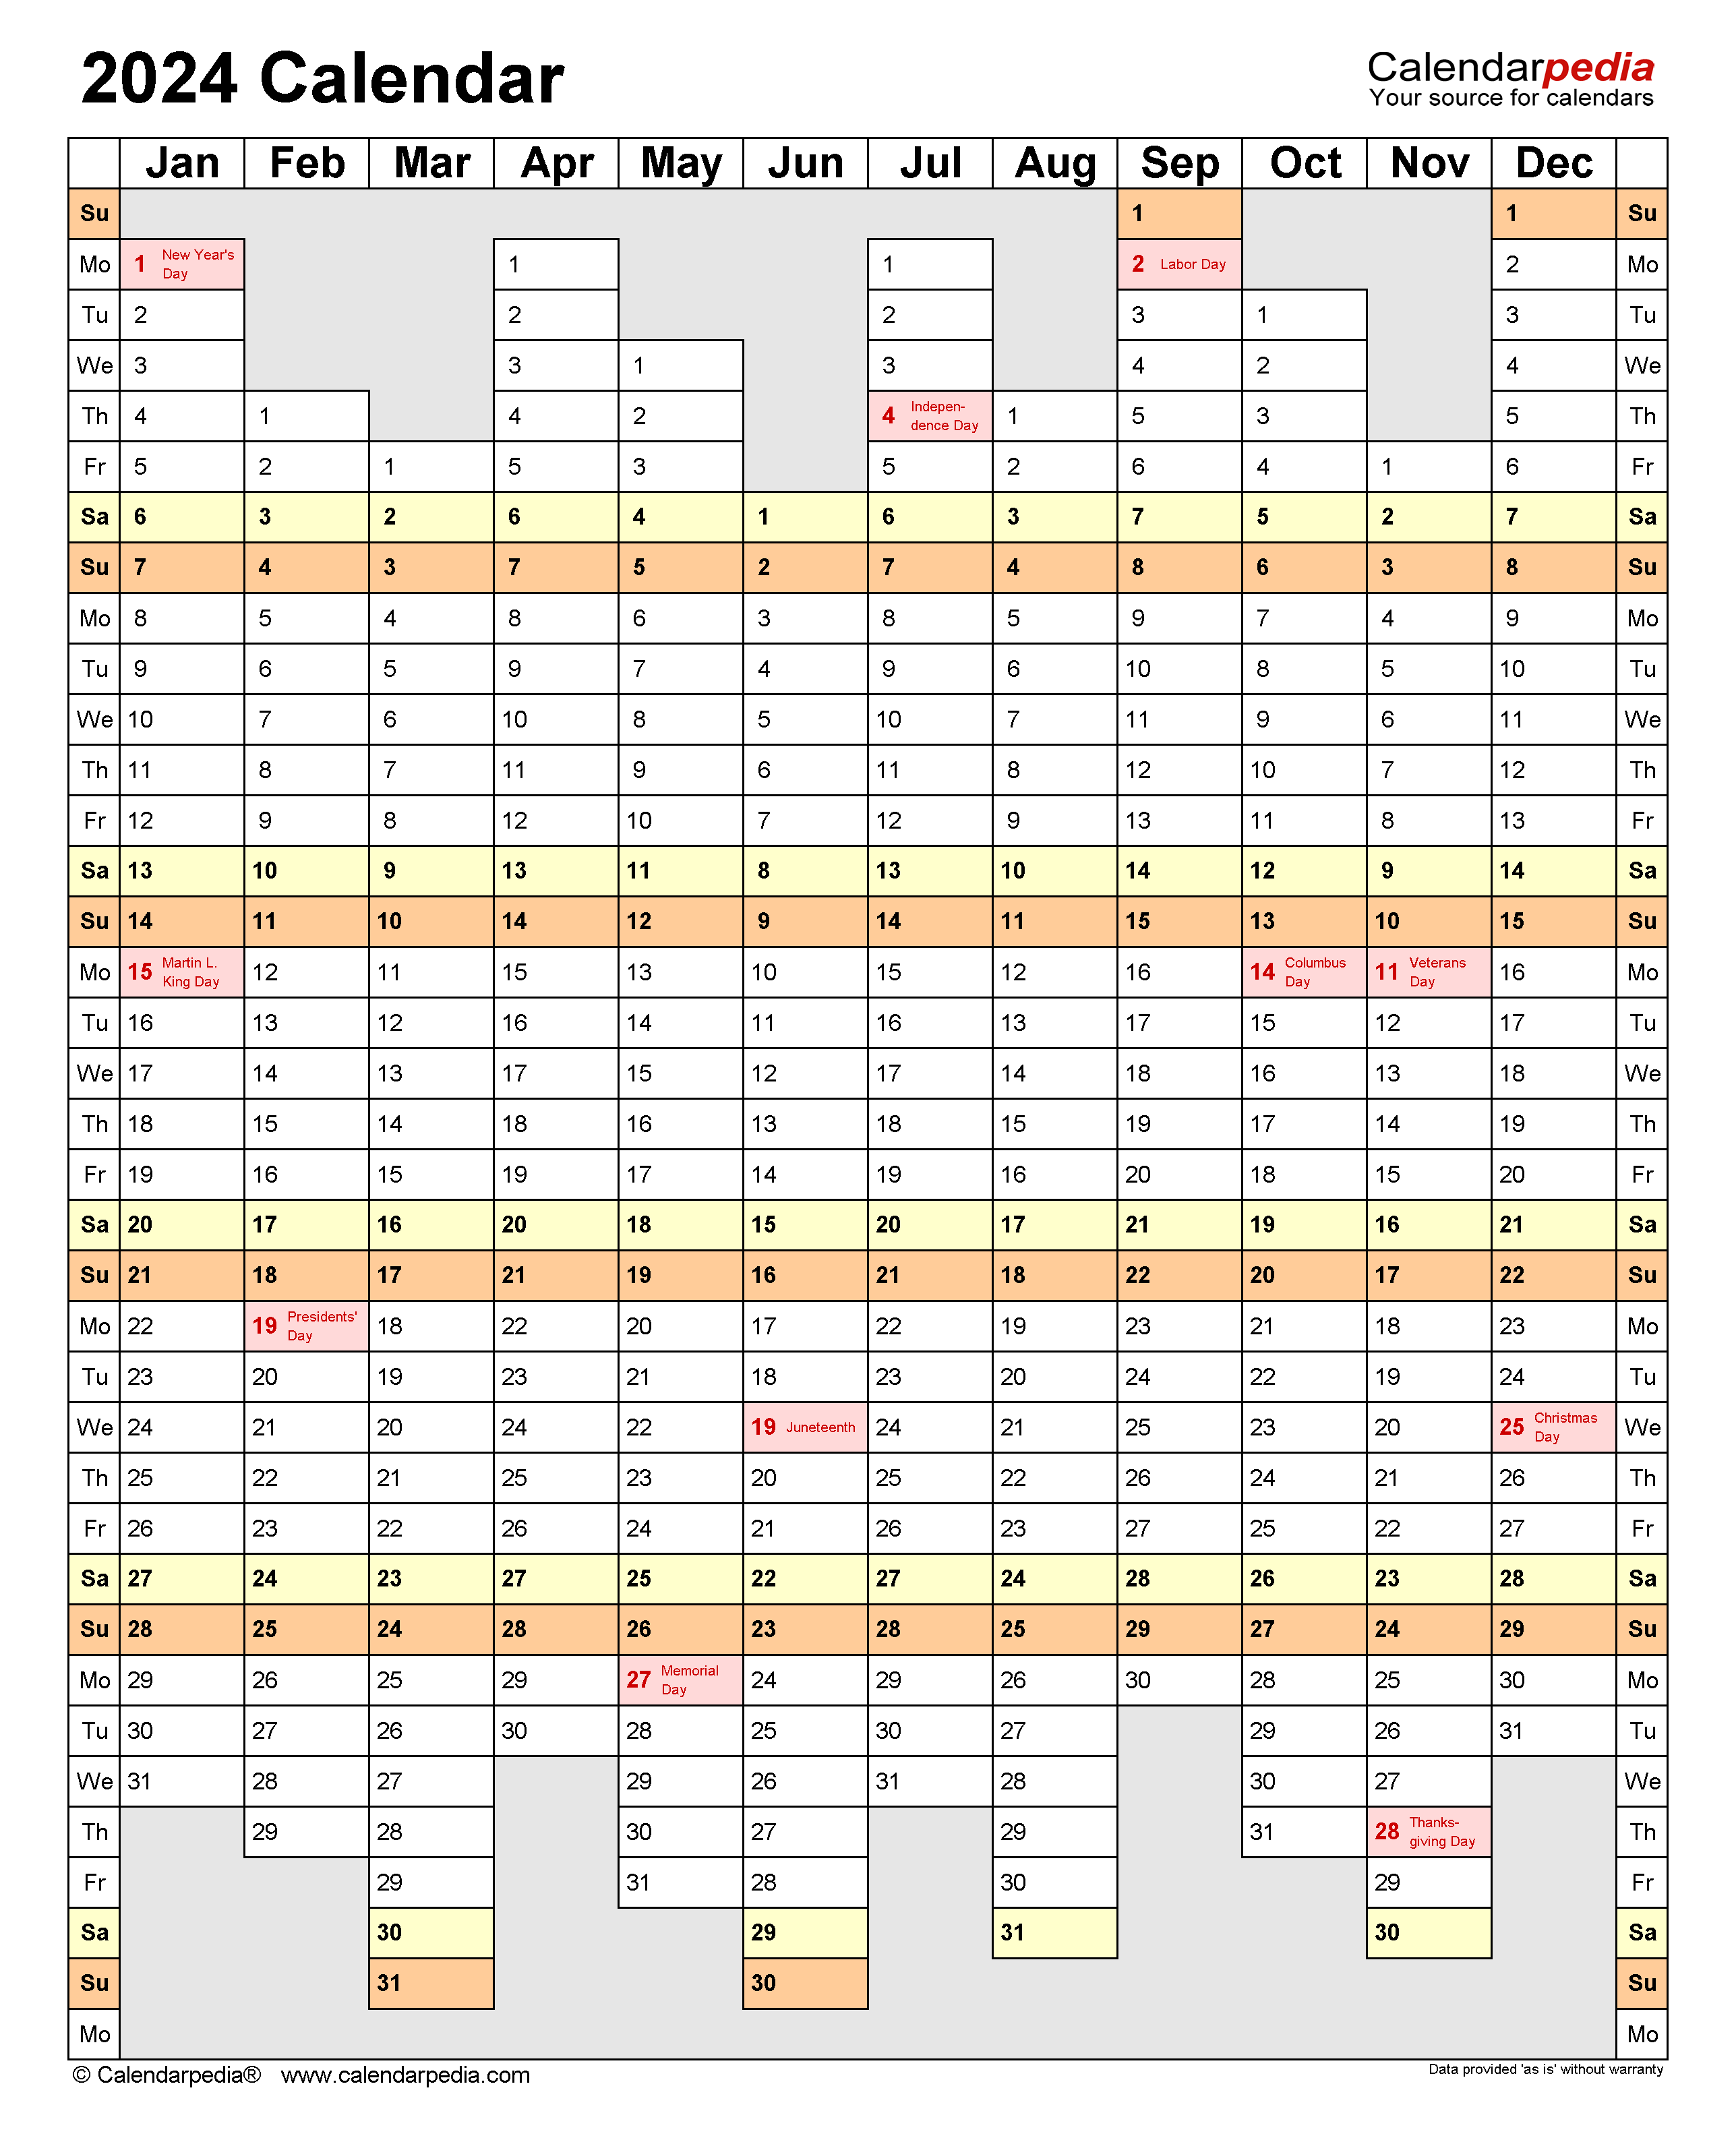 2024 Calendar Templates And Images 2024 Calendar Free Printable Excel - Free Printable 2024 Calendar Excel